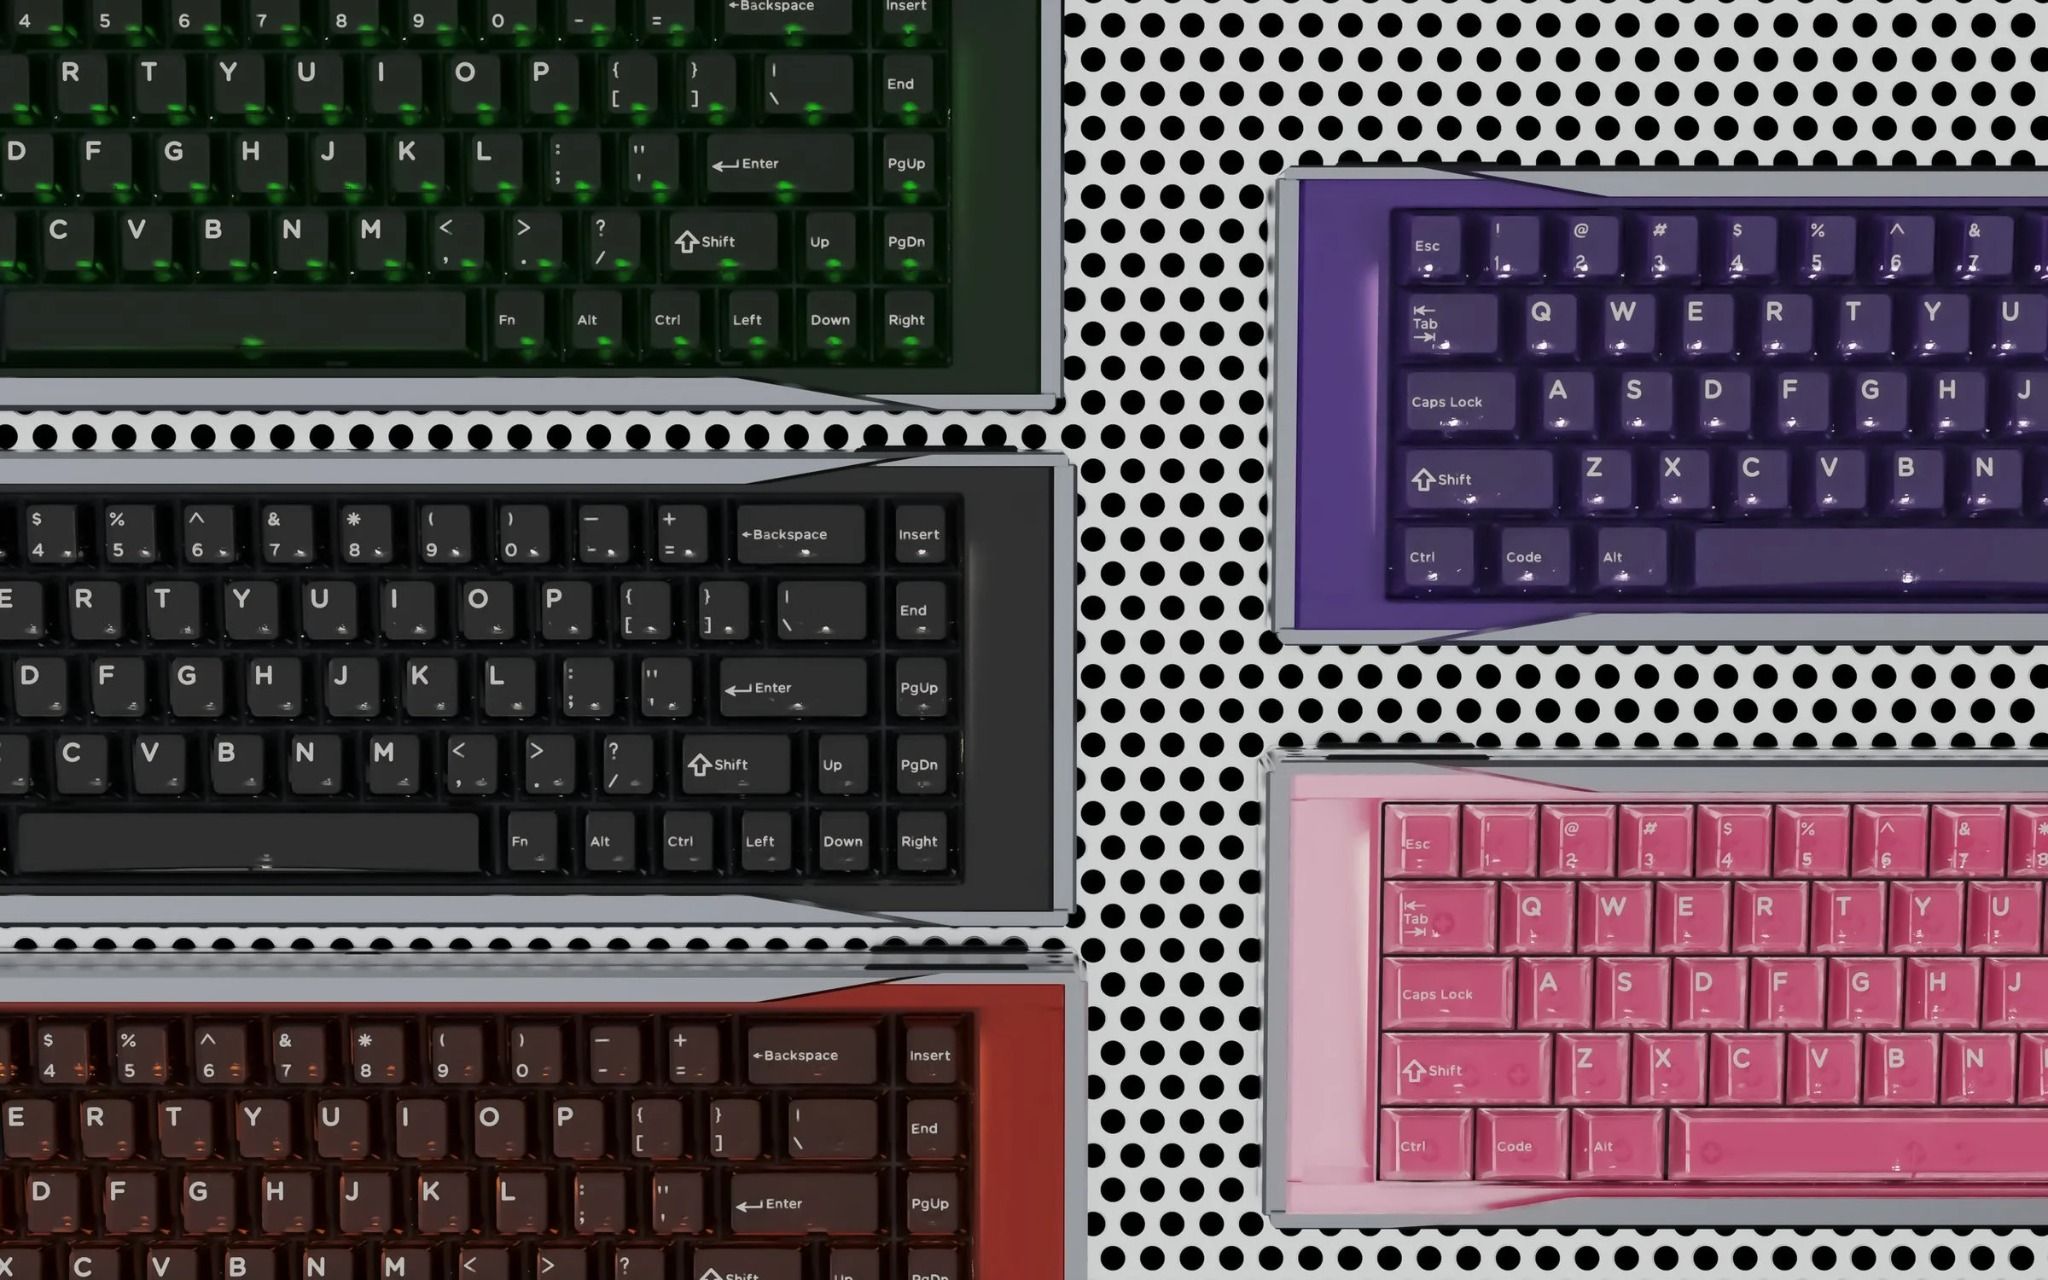  [Extra] Maxum65 Keyboard Kit 